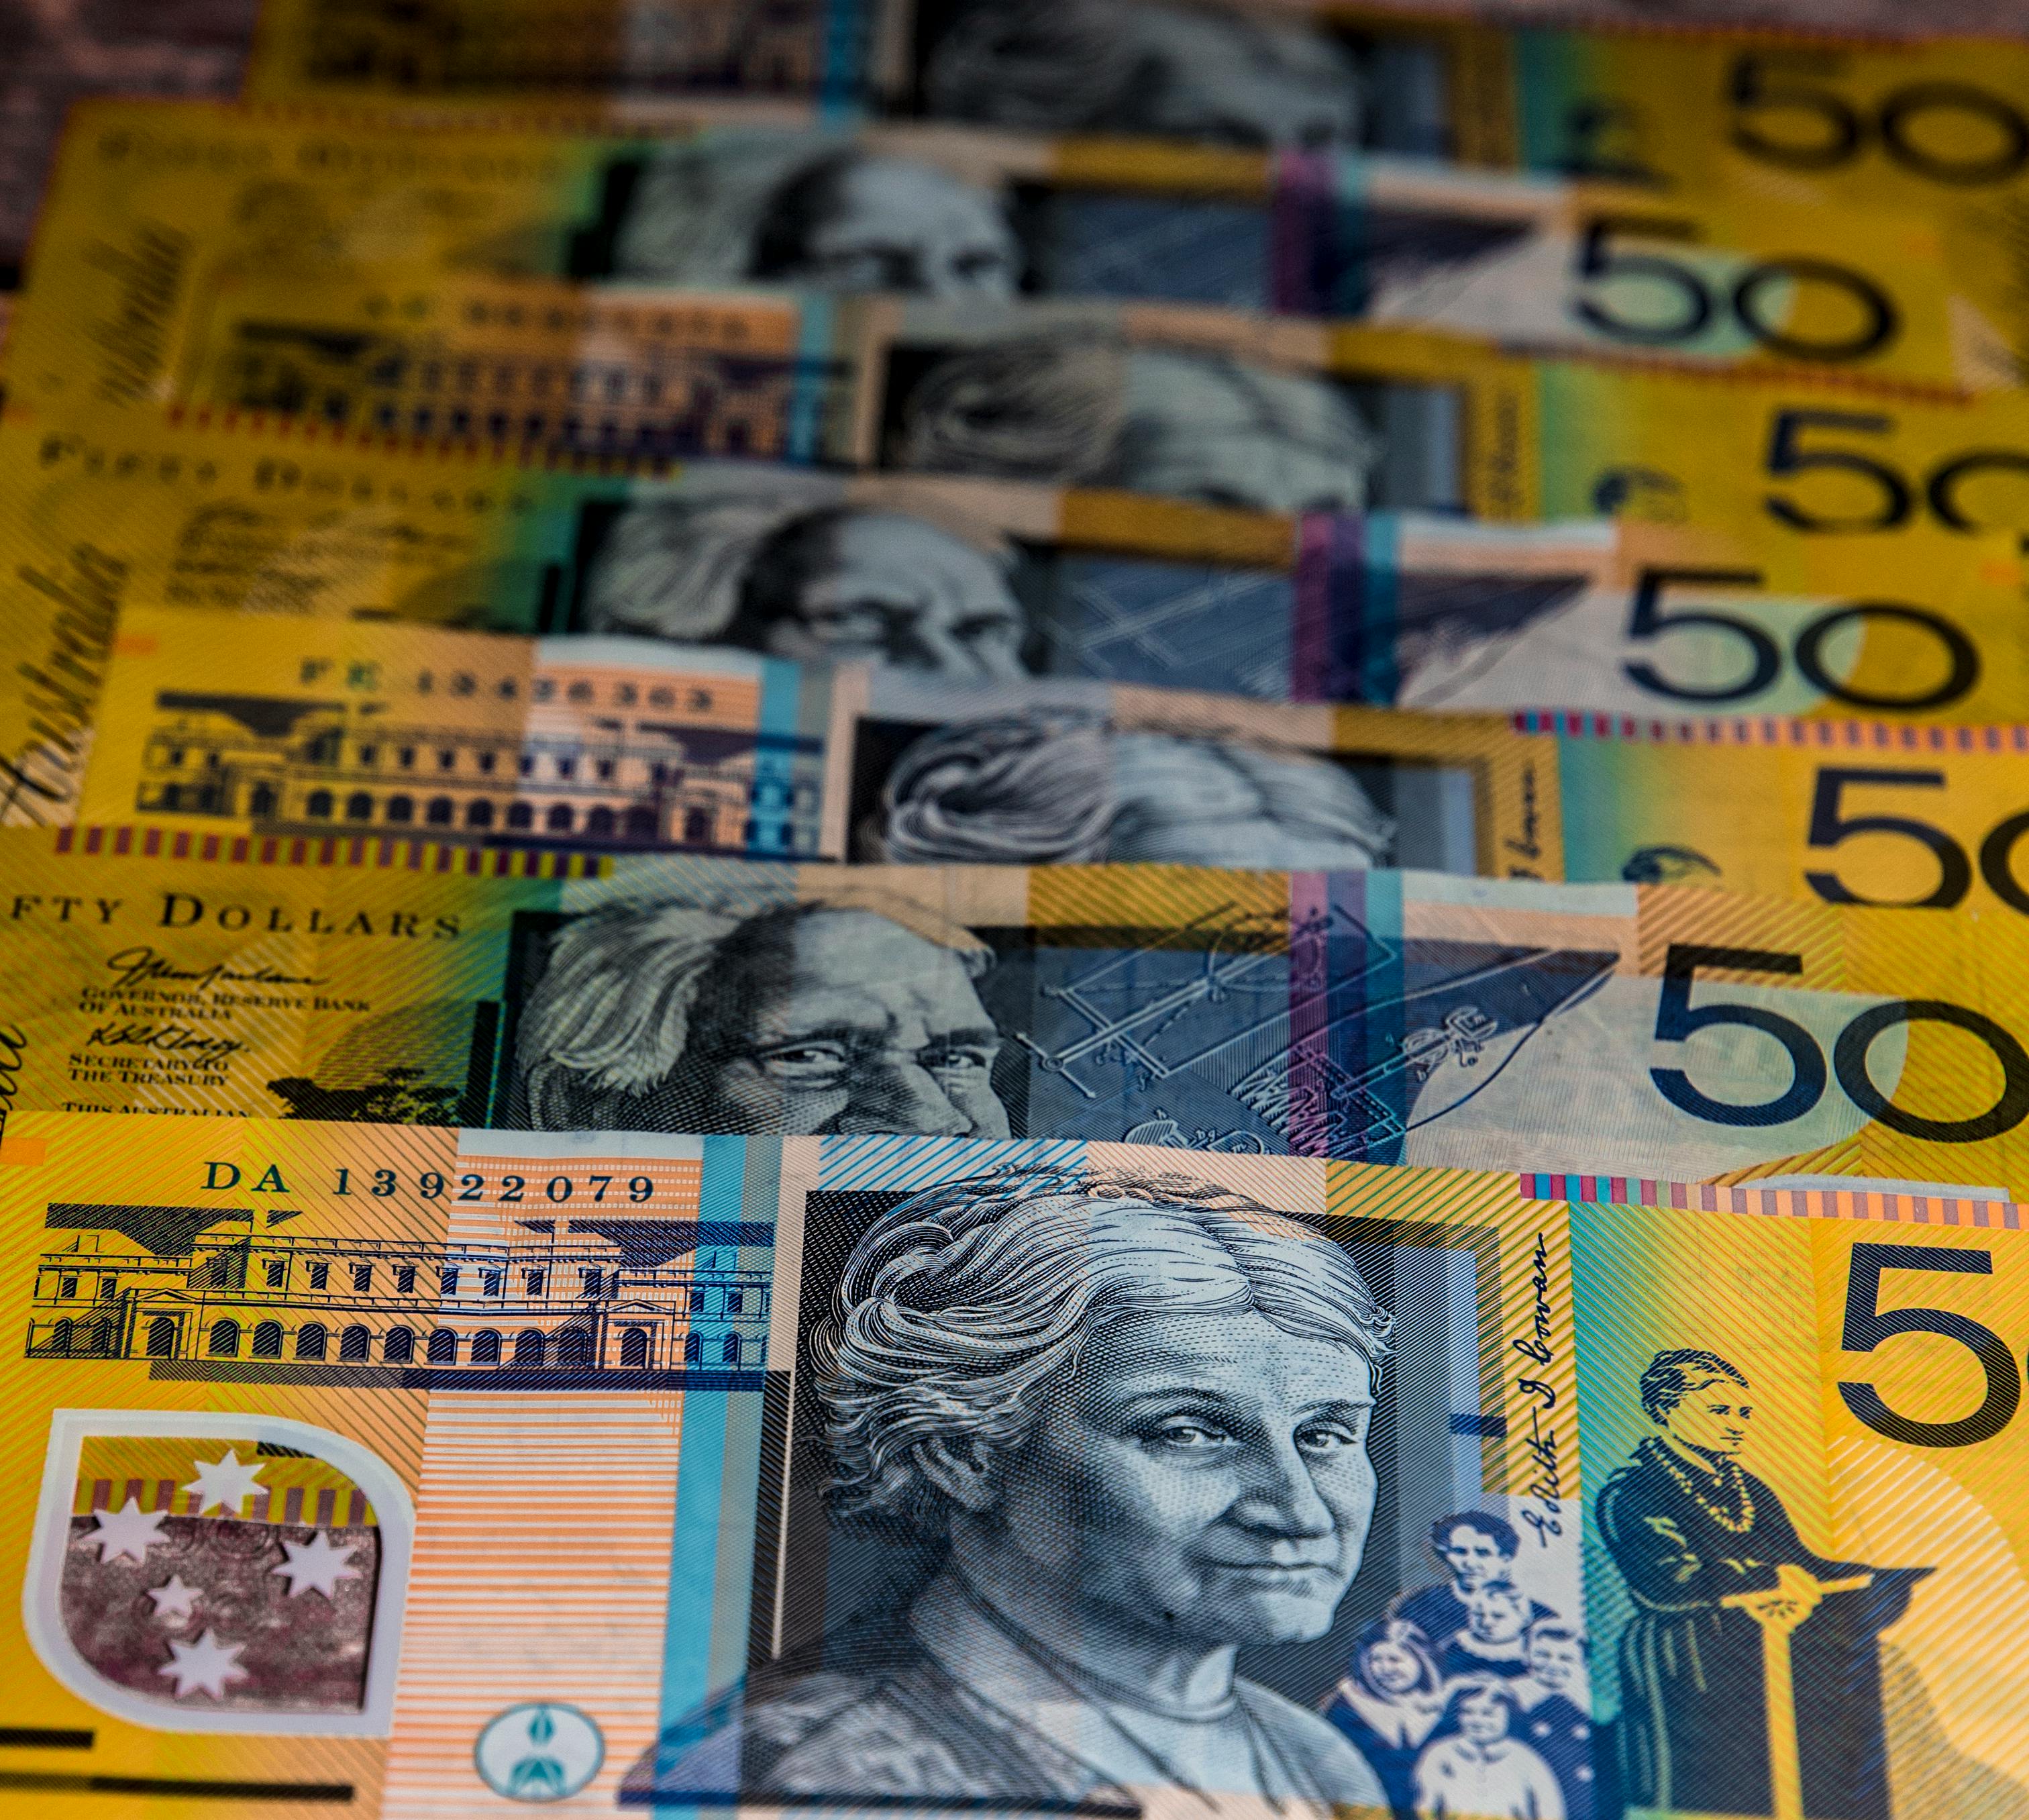 Australian Dollar Image & Photo (Free Trial)